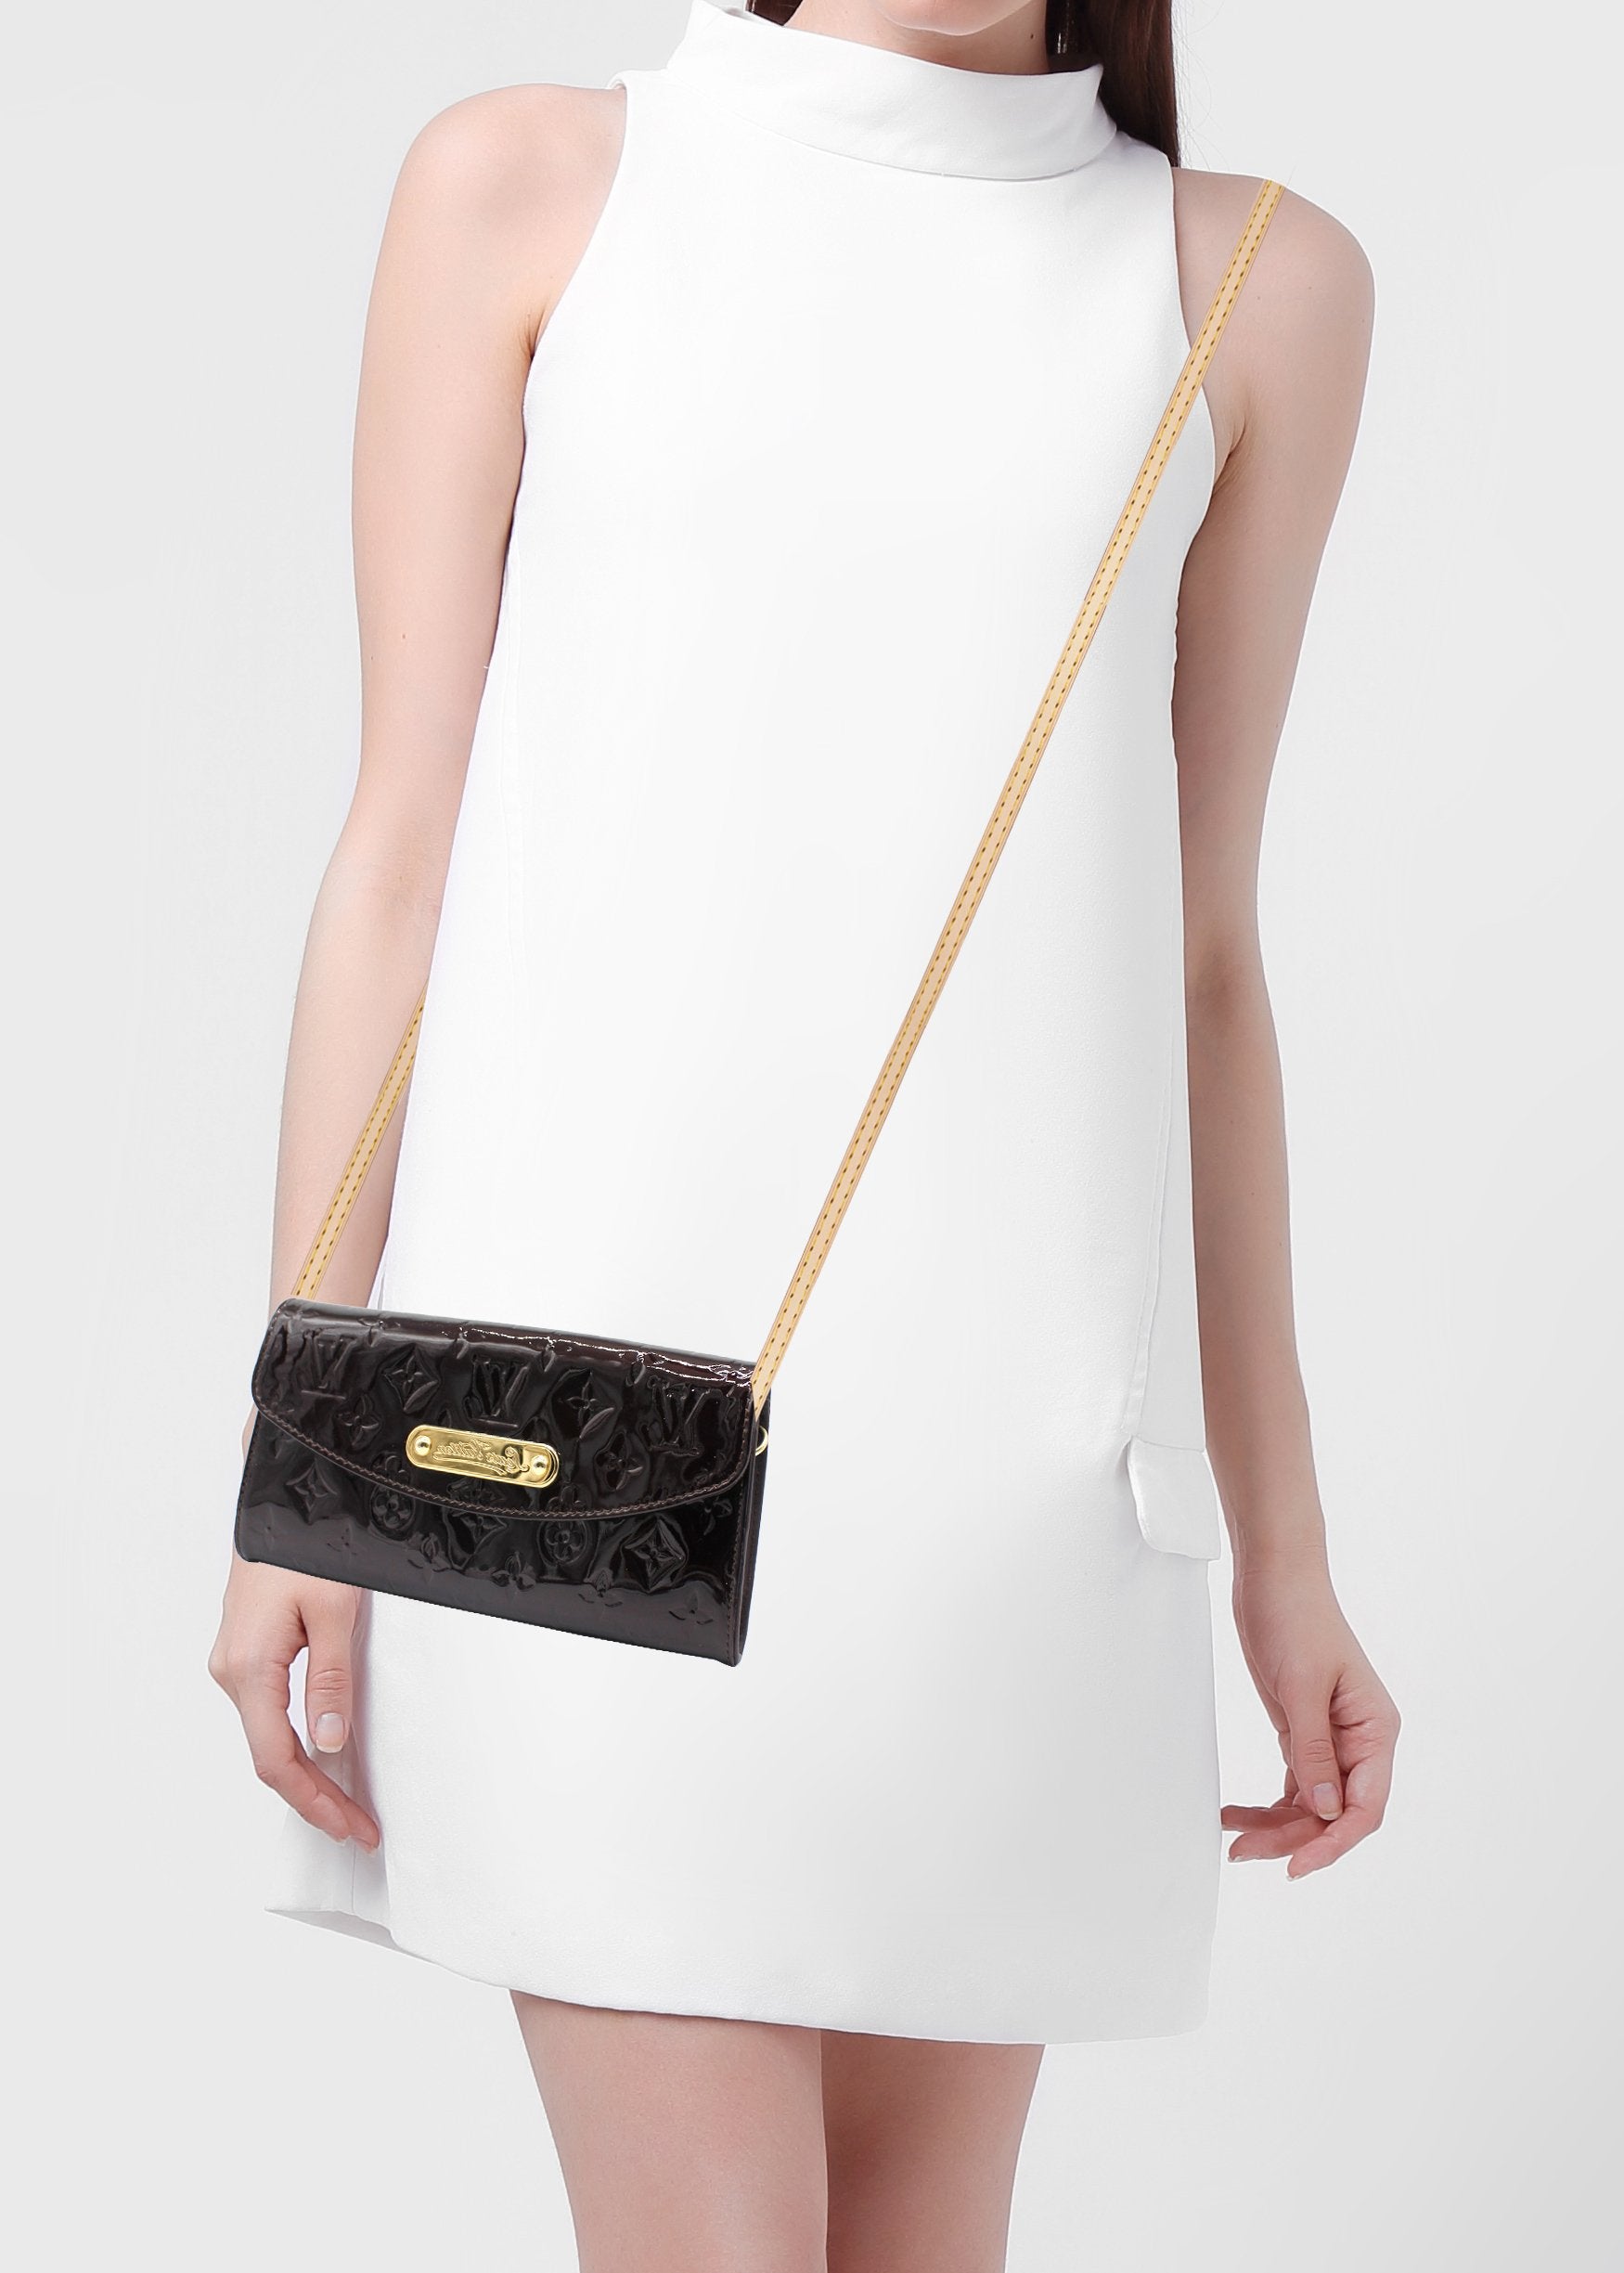 Louis Vuitton Amarante Monogram Vernis Sunset Boulevard Bag at